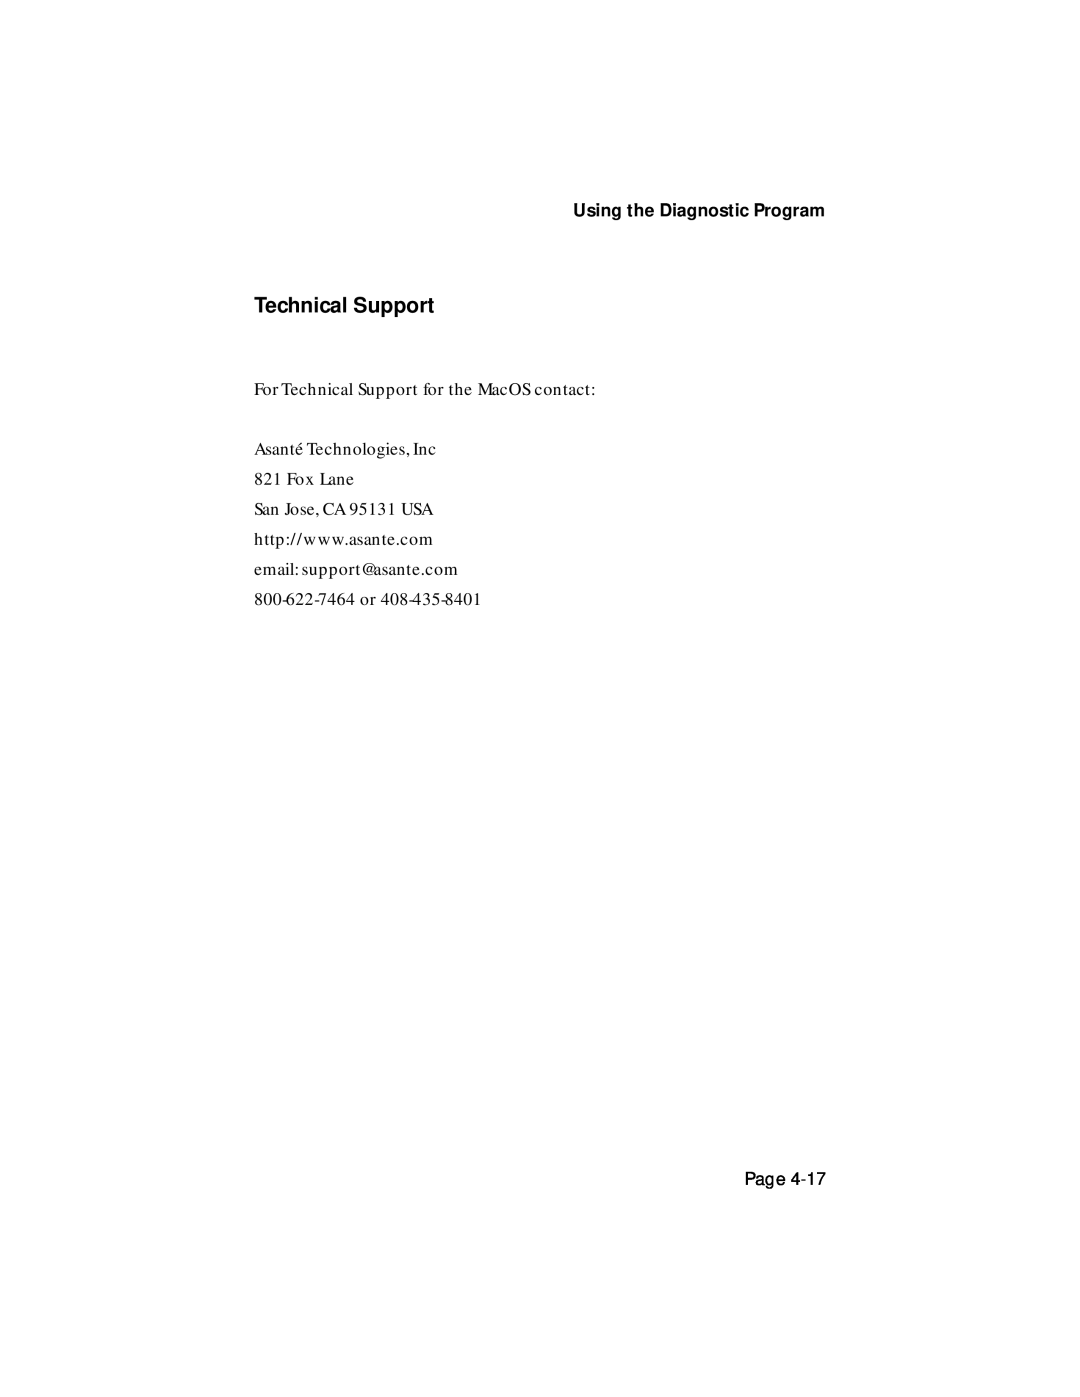 Asante Technologies 1064SX manual Technical Support, Using the Diagnostic Program, Fox Lane, Page 